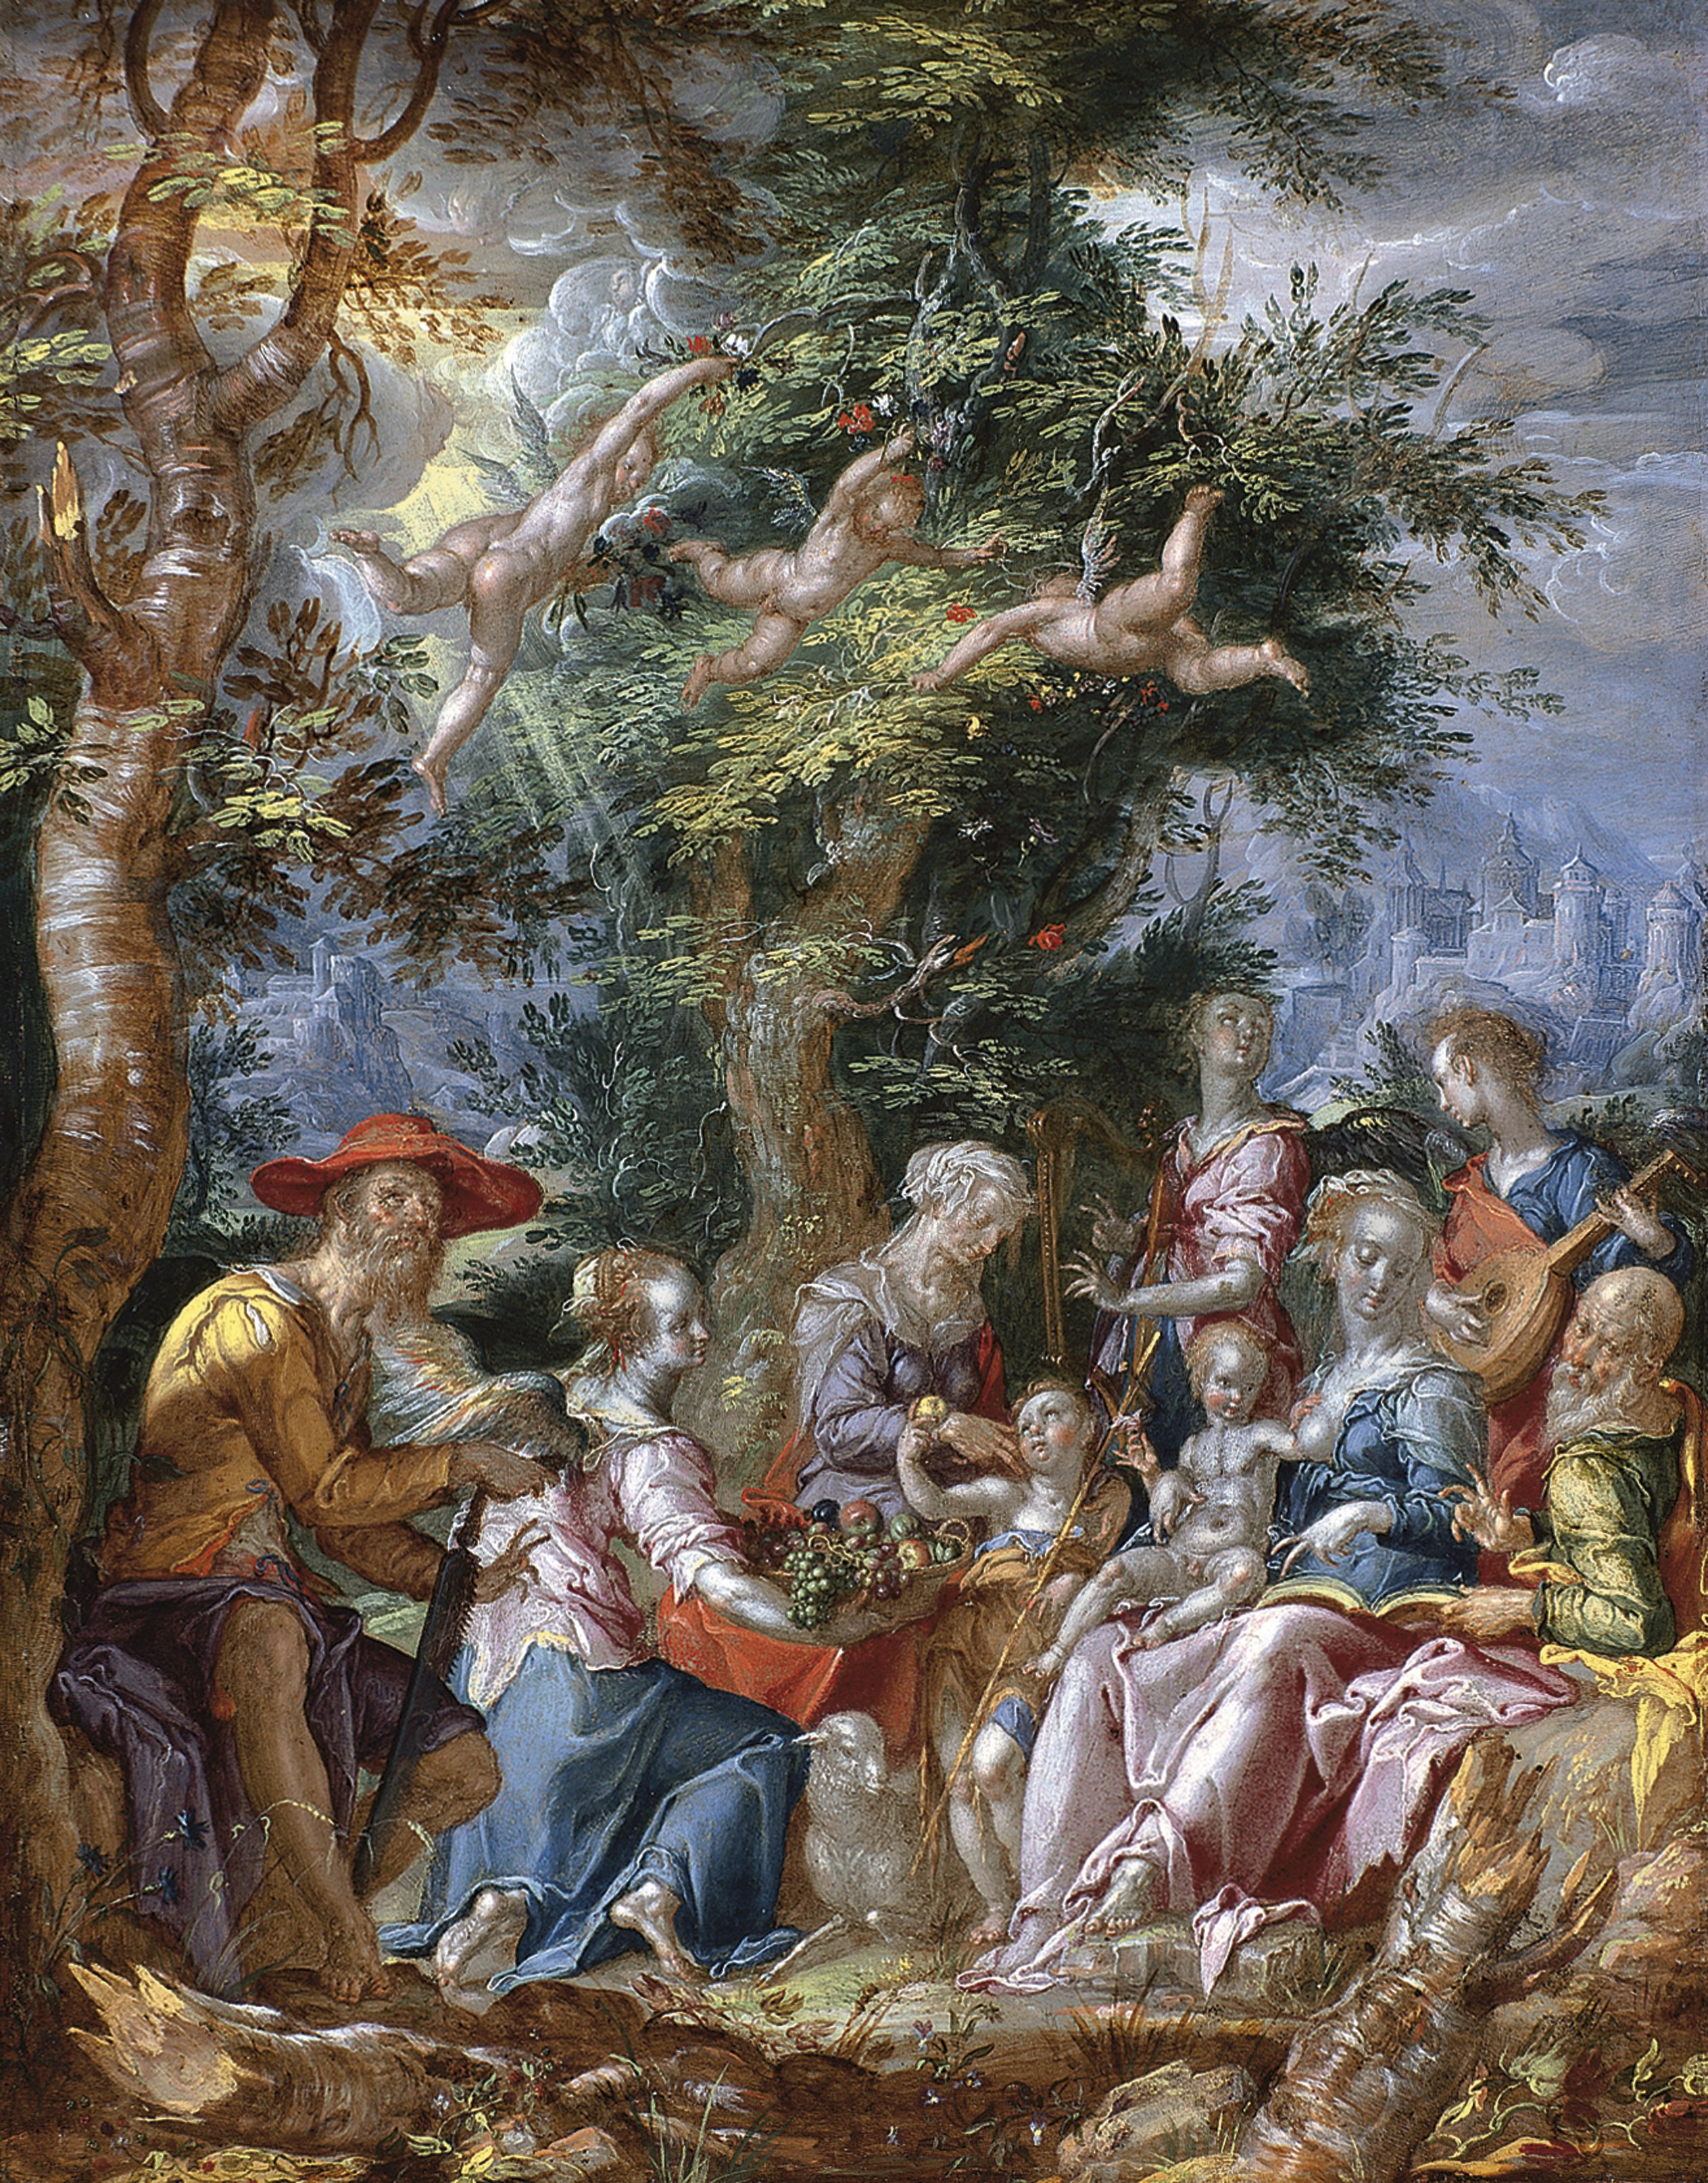 The Holy Family with Saints and Angels. La Sagrada Familia con ángeles y santos, c. 1606-1610